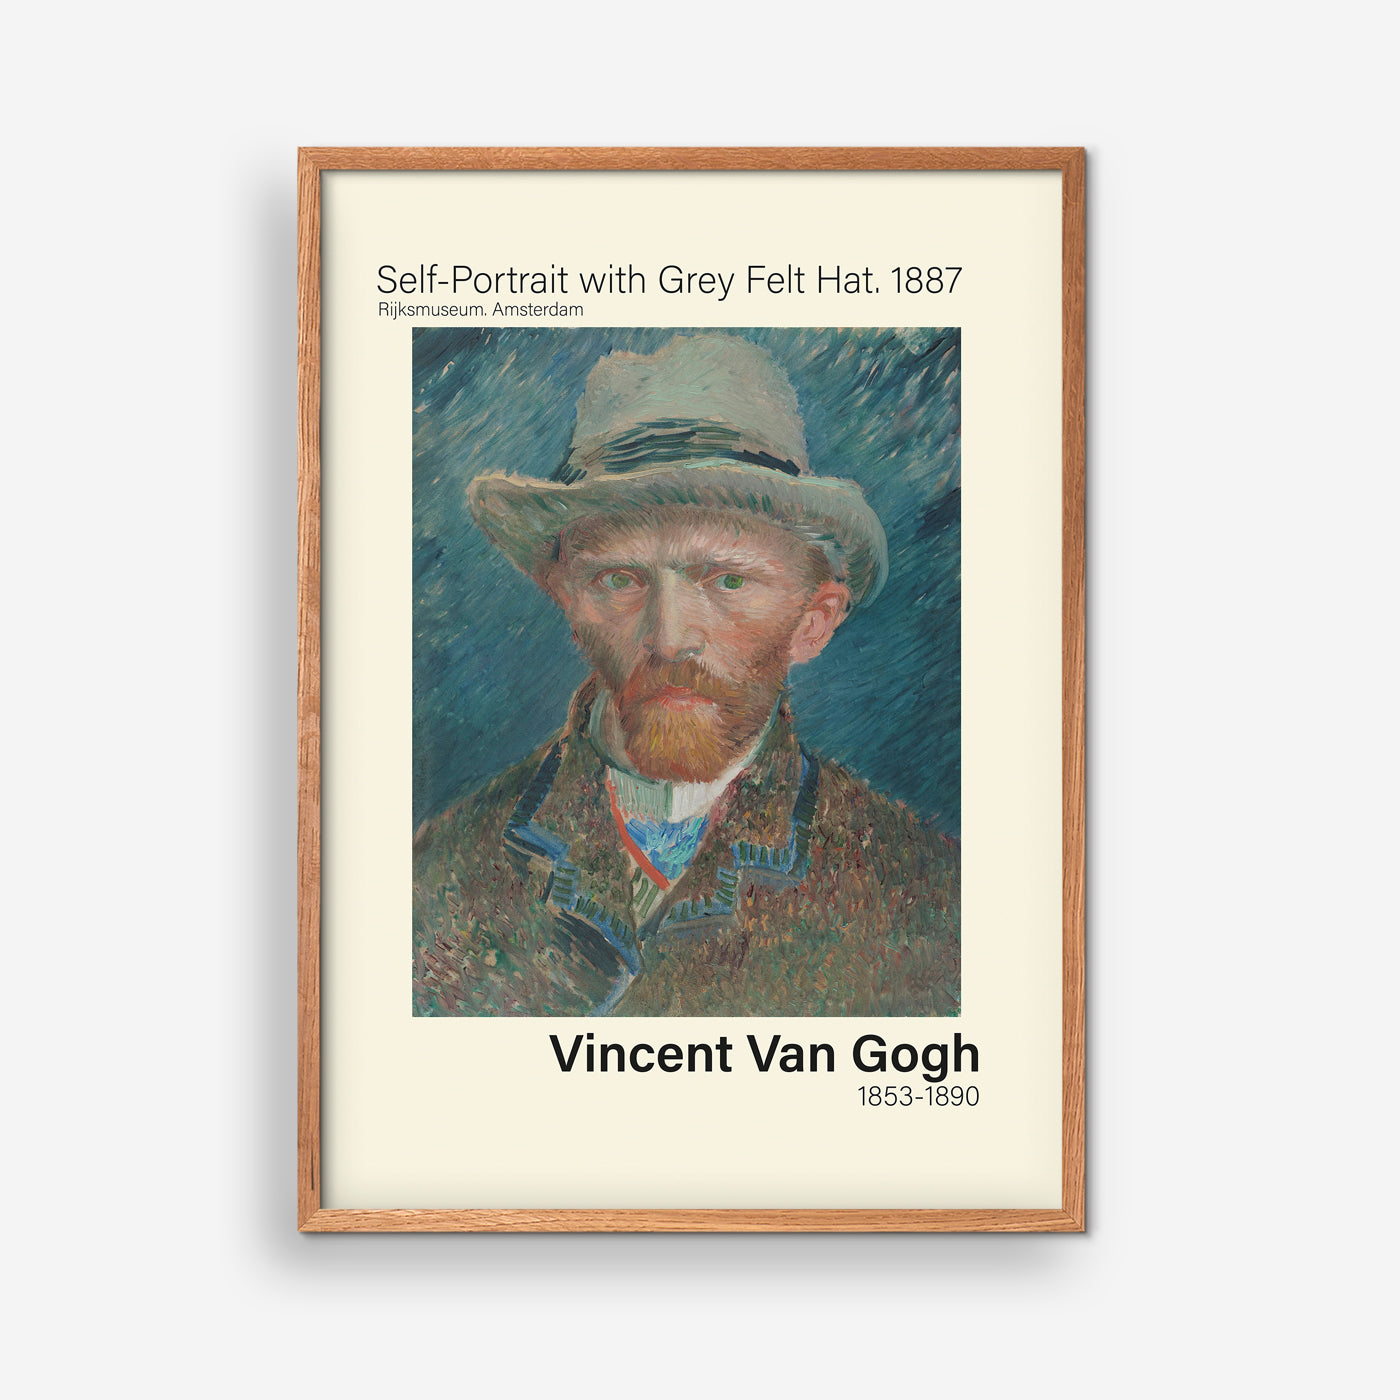 Self-Portrait with Gray Felt Hat, 1887 - Van Gogh